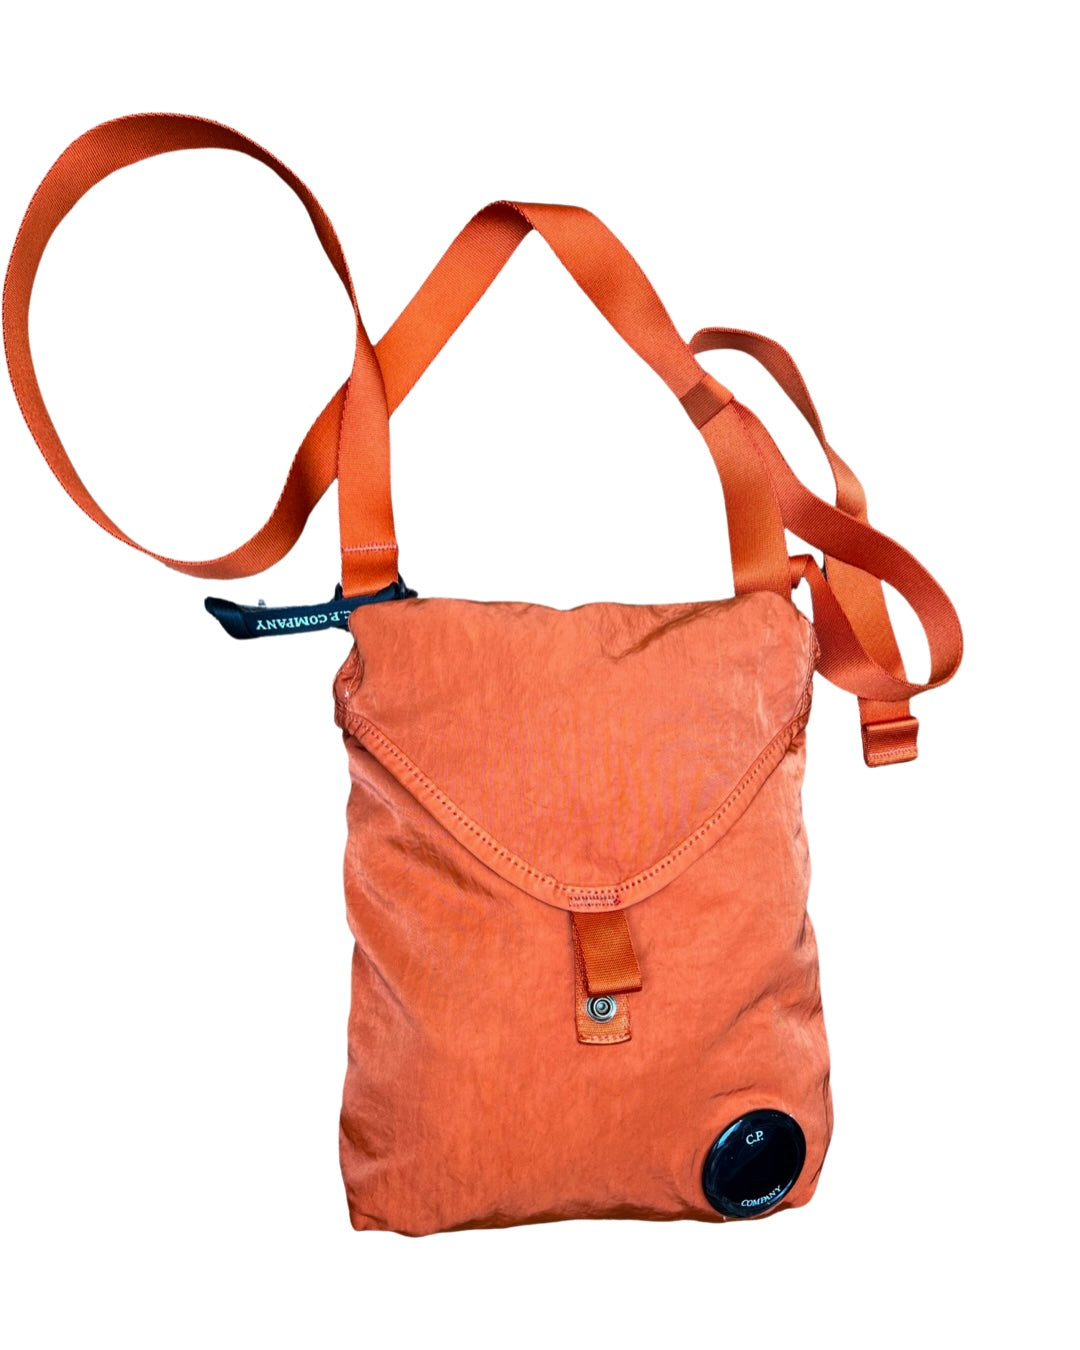 CP travel bag strap 439 Orange